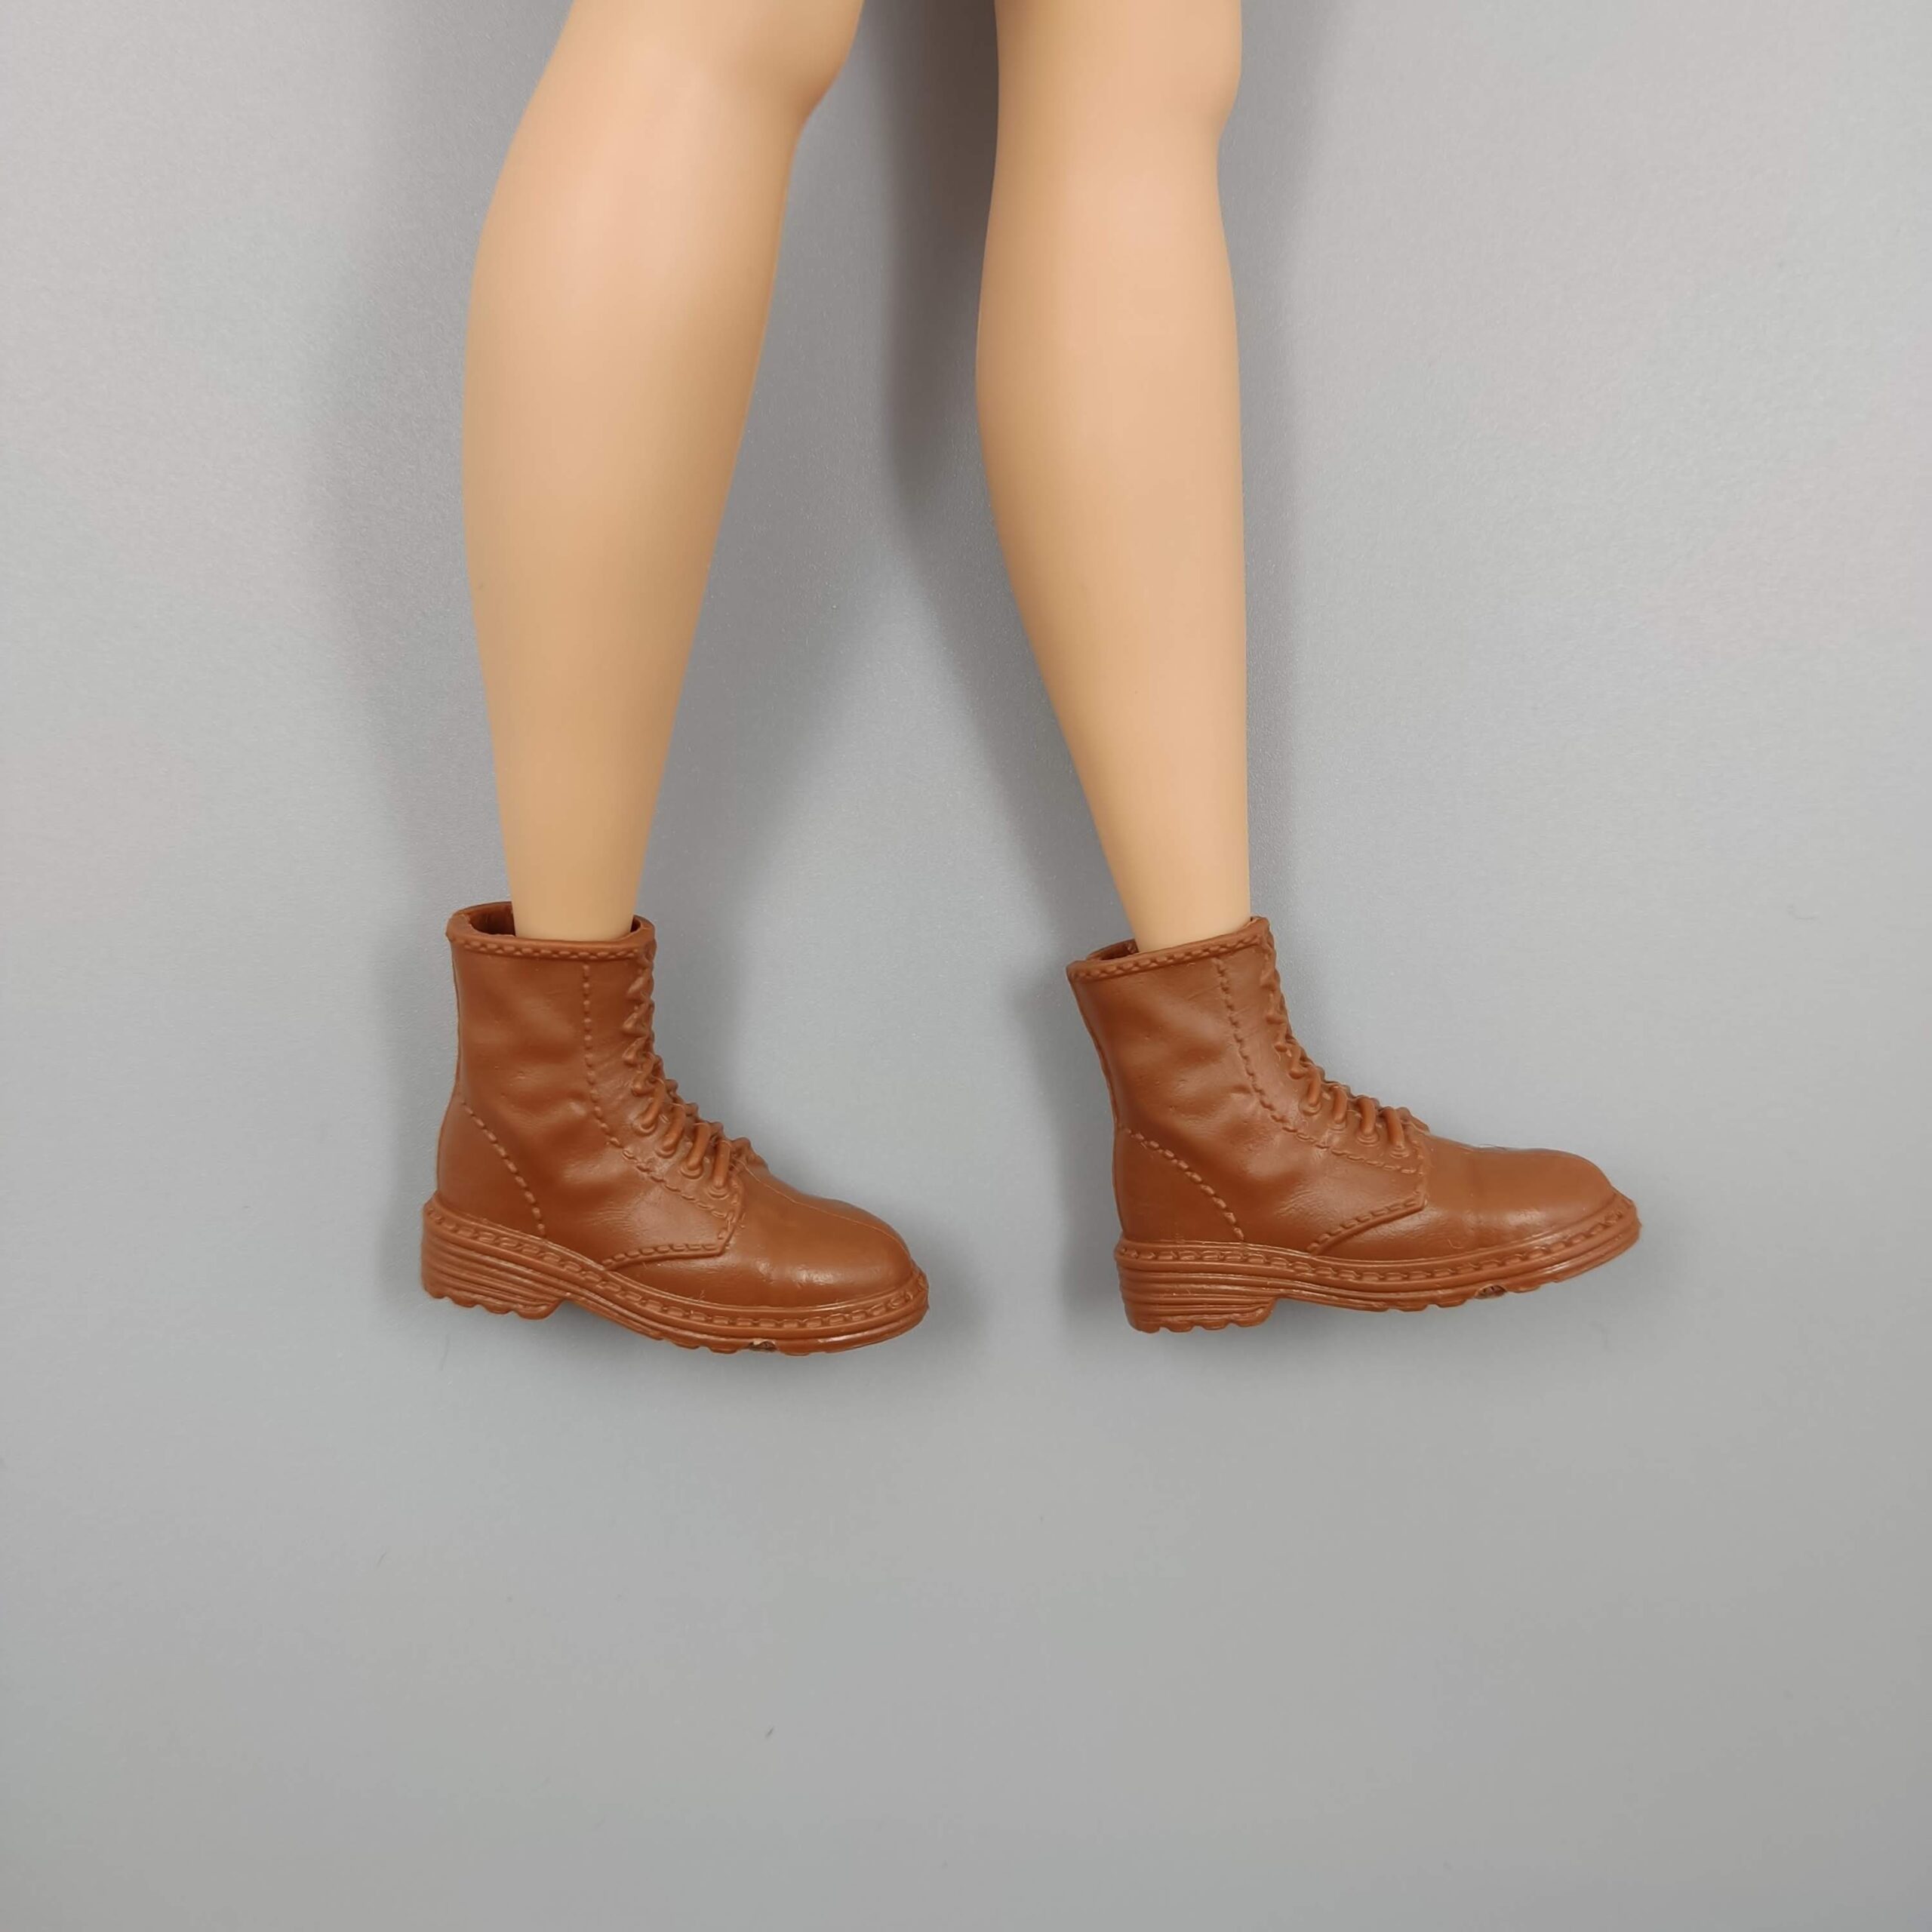 Barbie shoes, Barbie curvy boots, Barbie tall boots - DailyDoll Shop